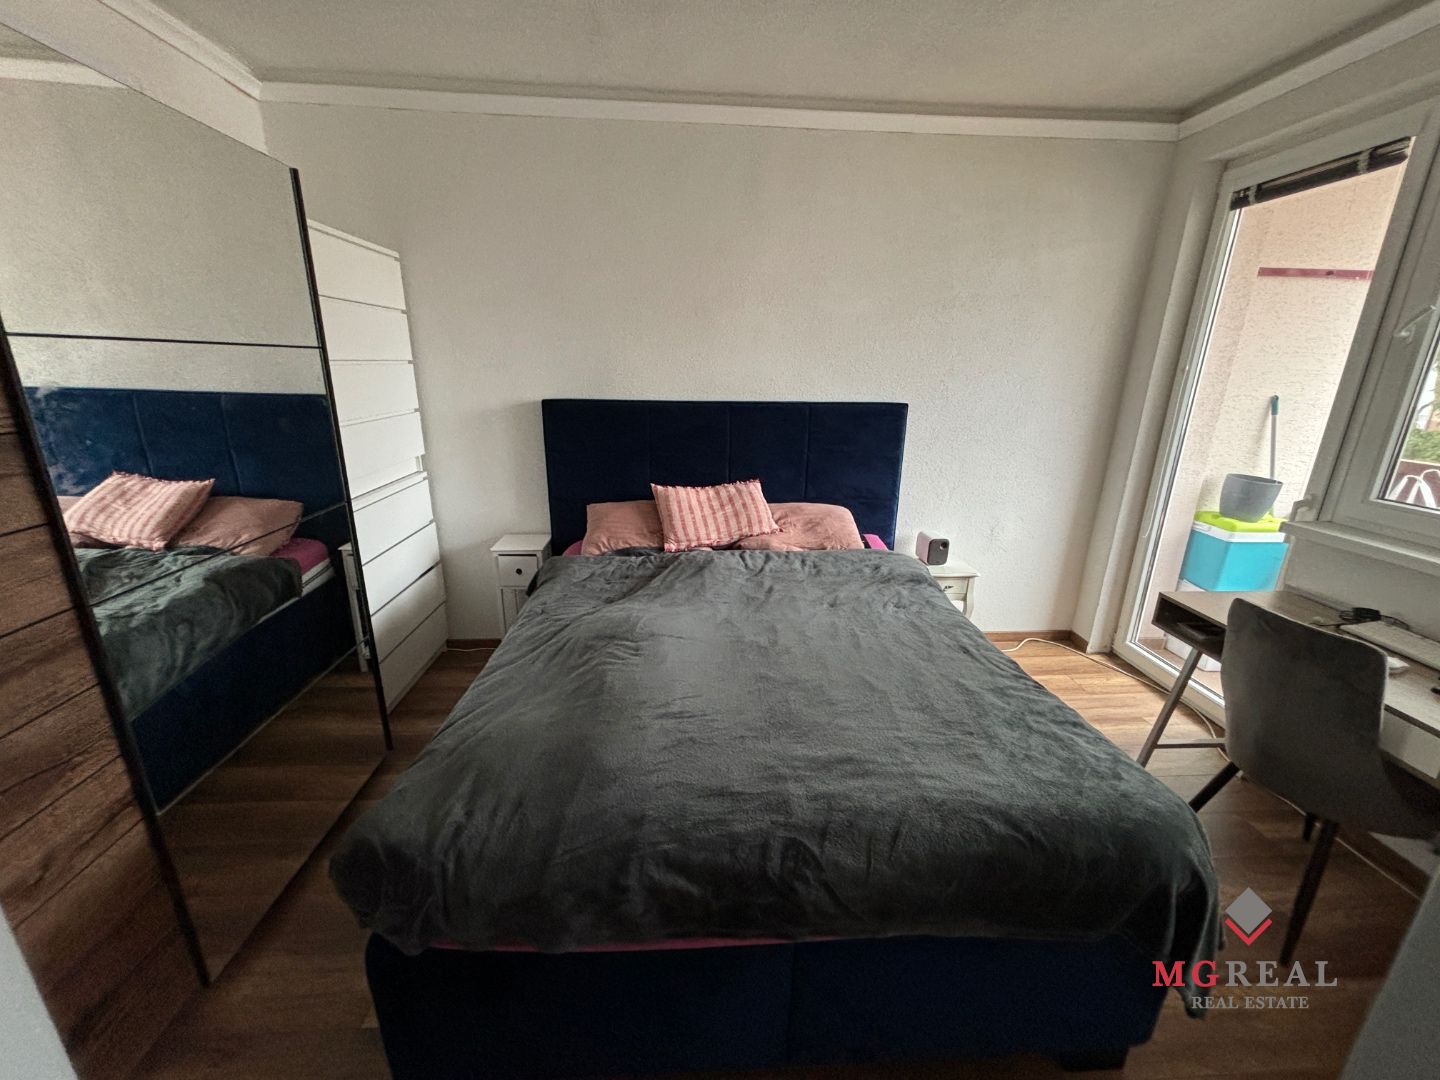 2 izbový byt s balkónom po rekonštrukcii Topoľčany/ VYPLATENA ZALOHA